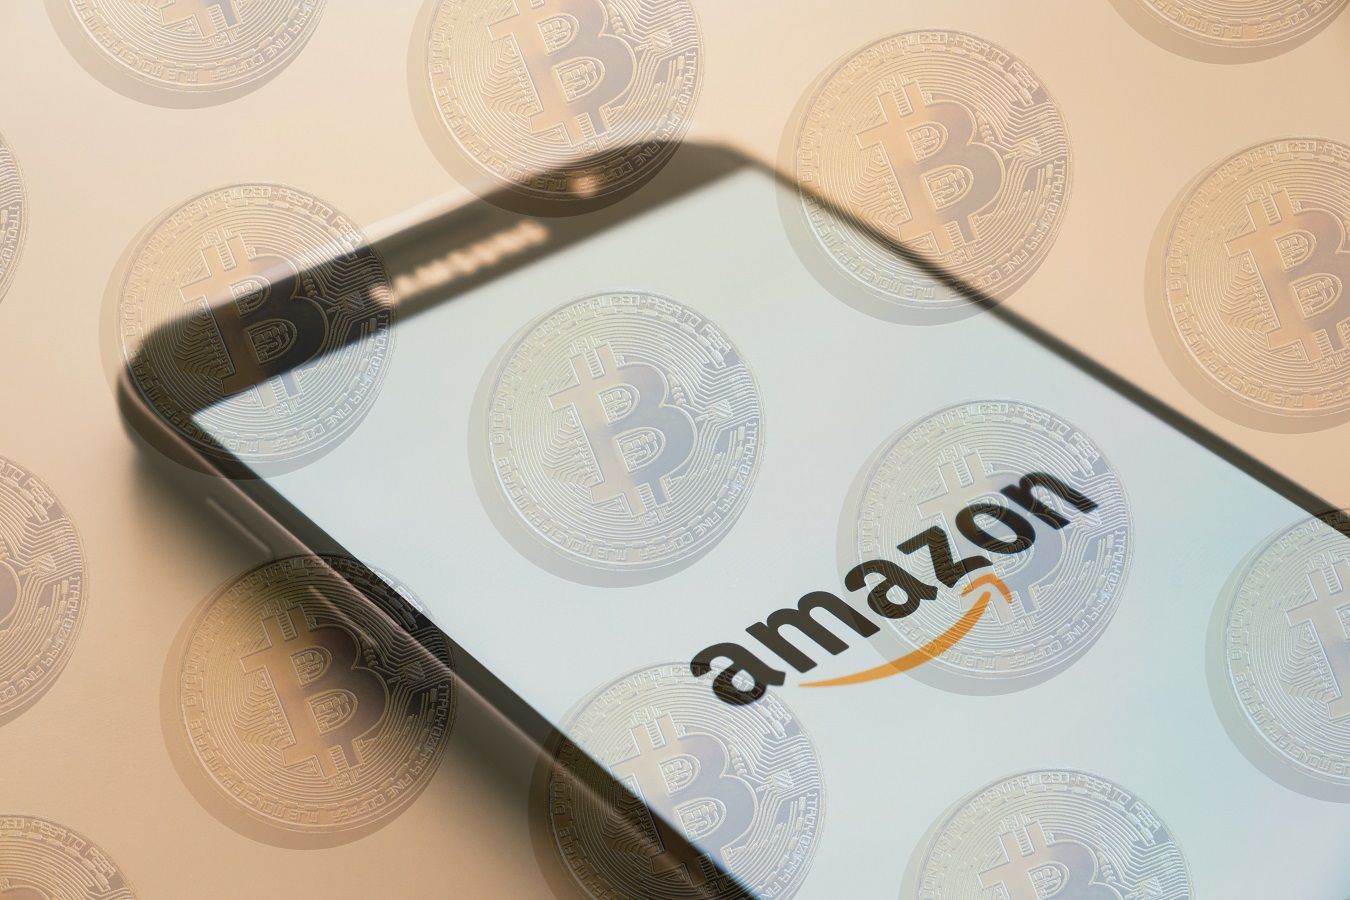 Amazon may soon start accepting Cryptocurrencies